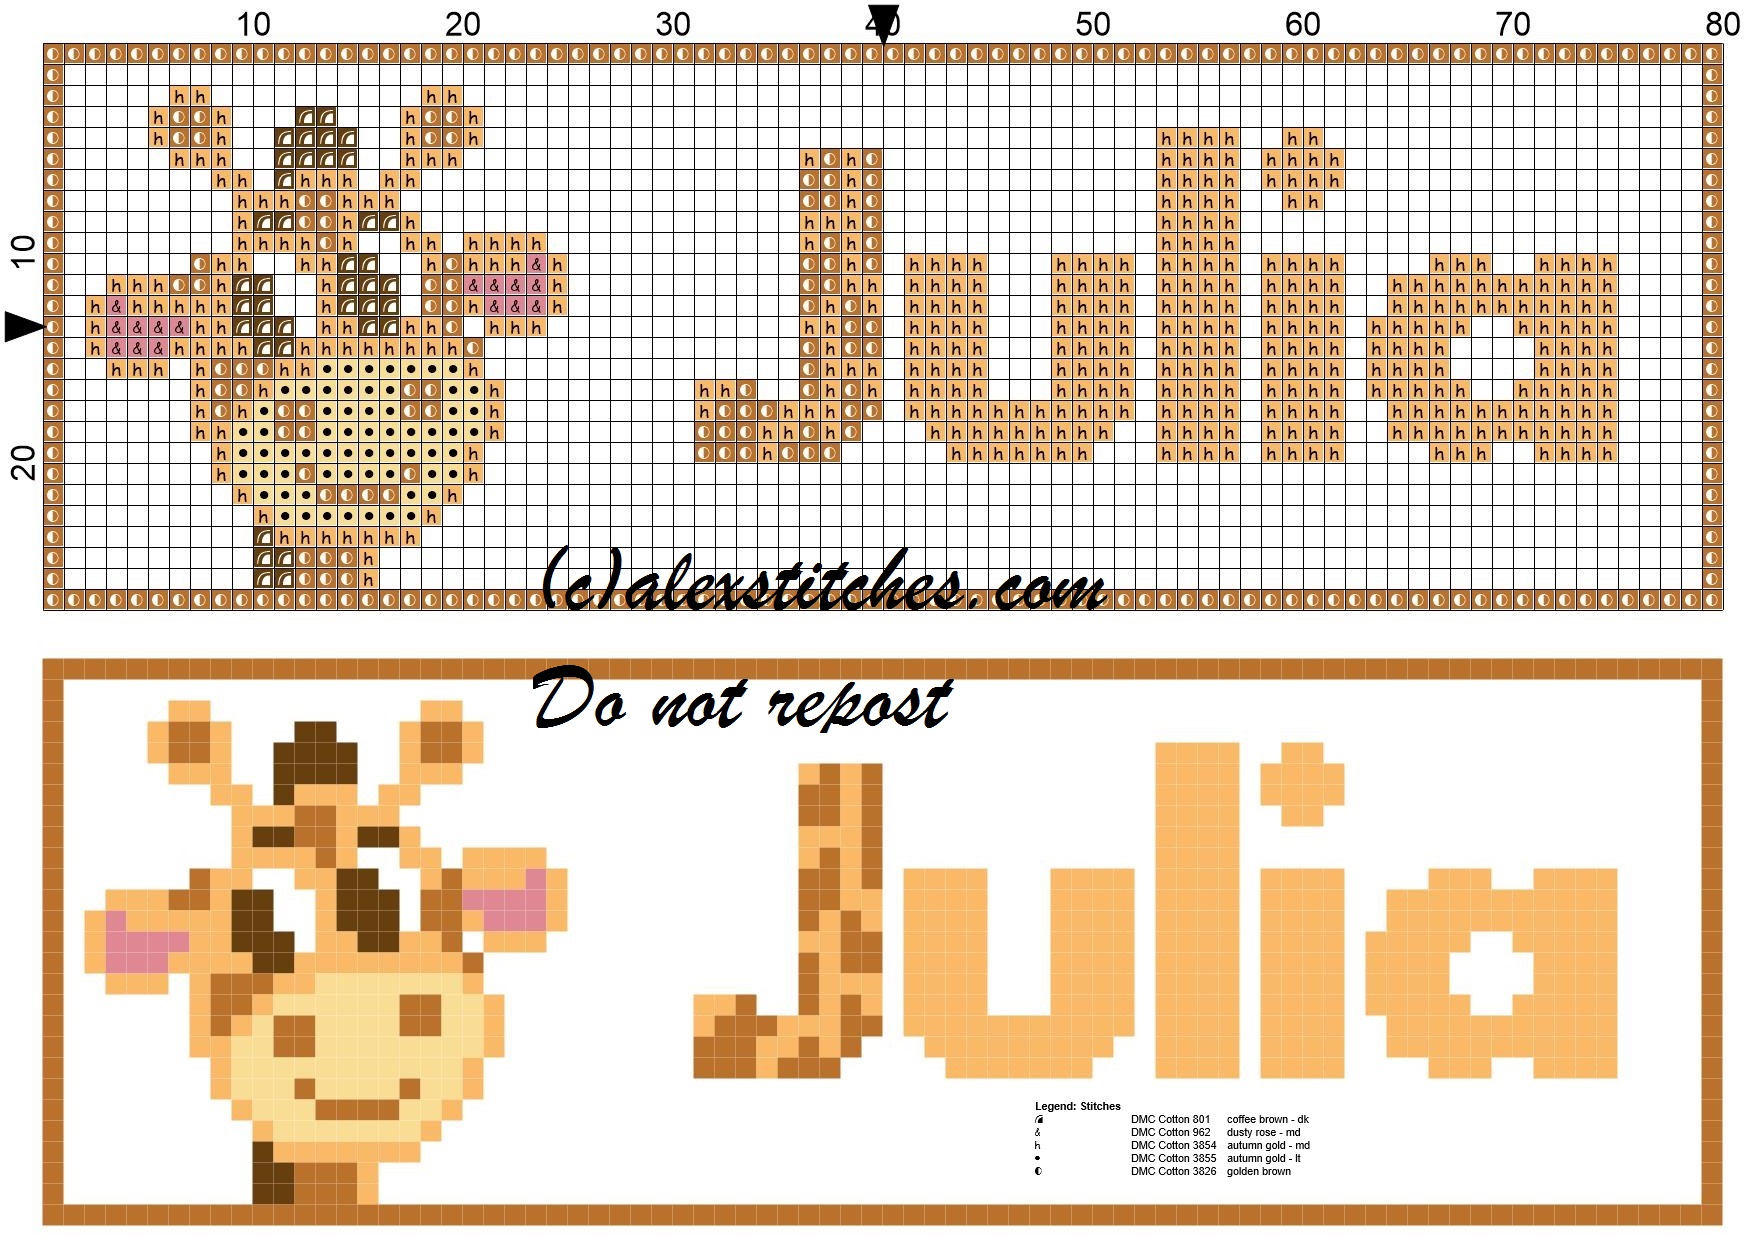 Julia name with giraffe cross stitch pattern